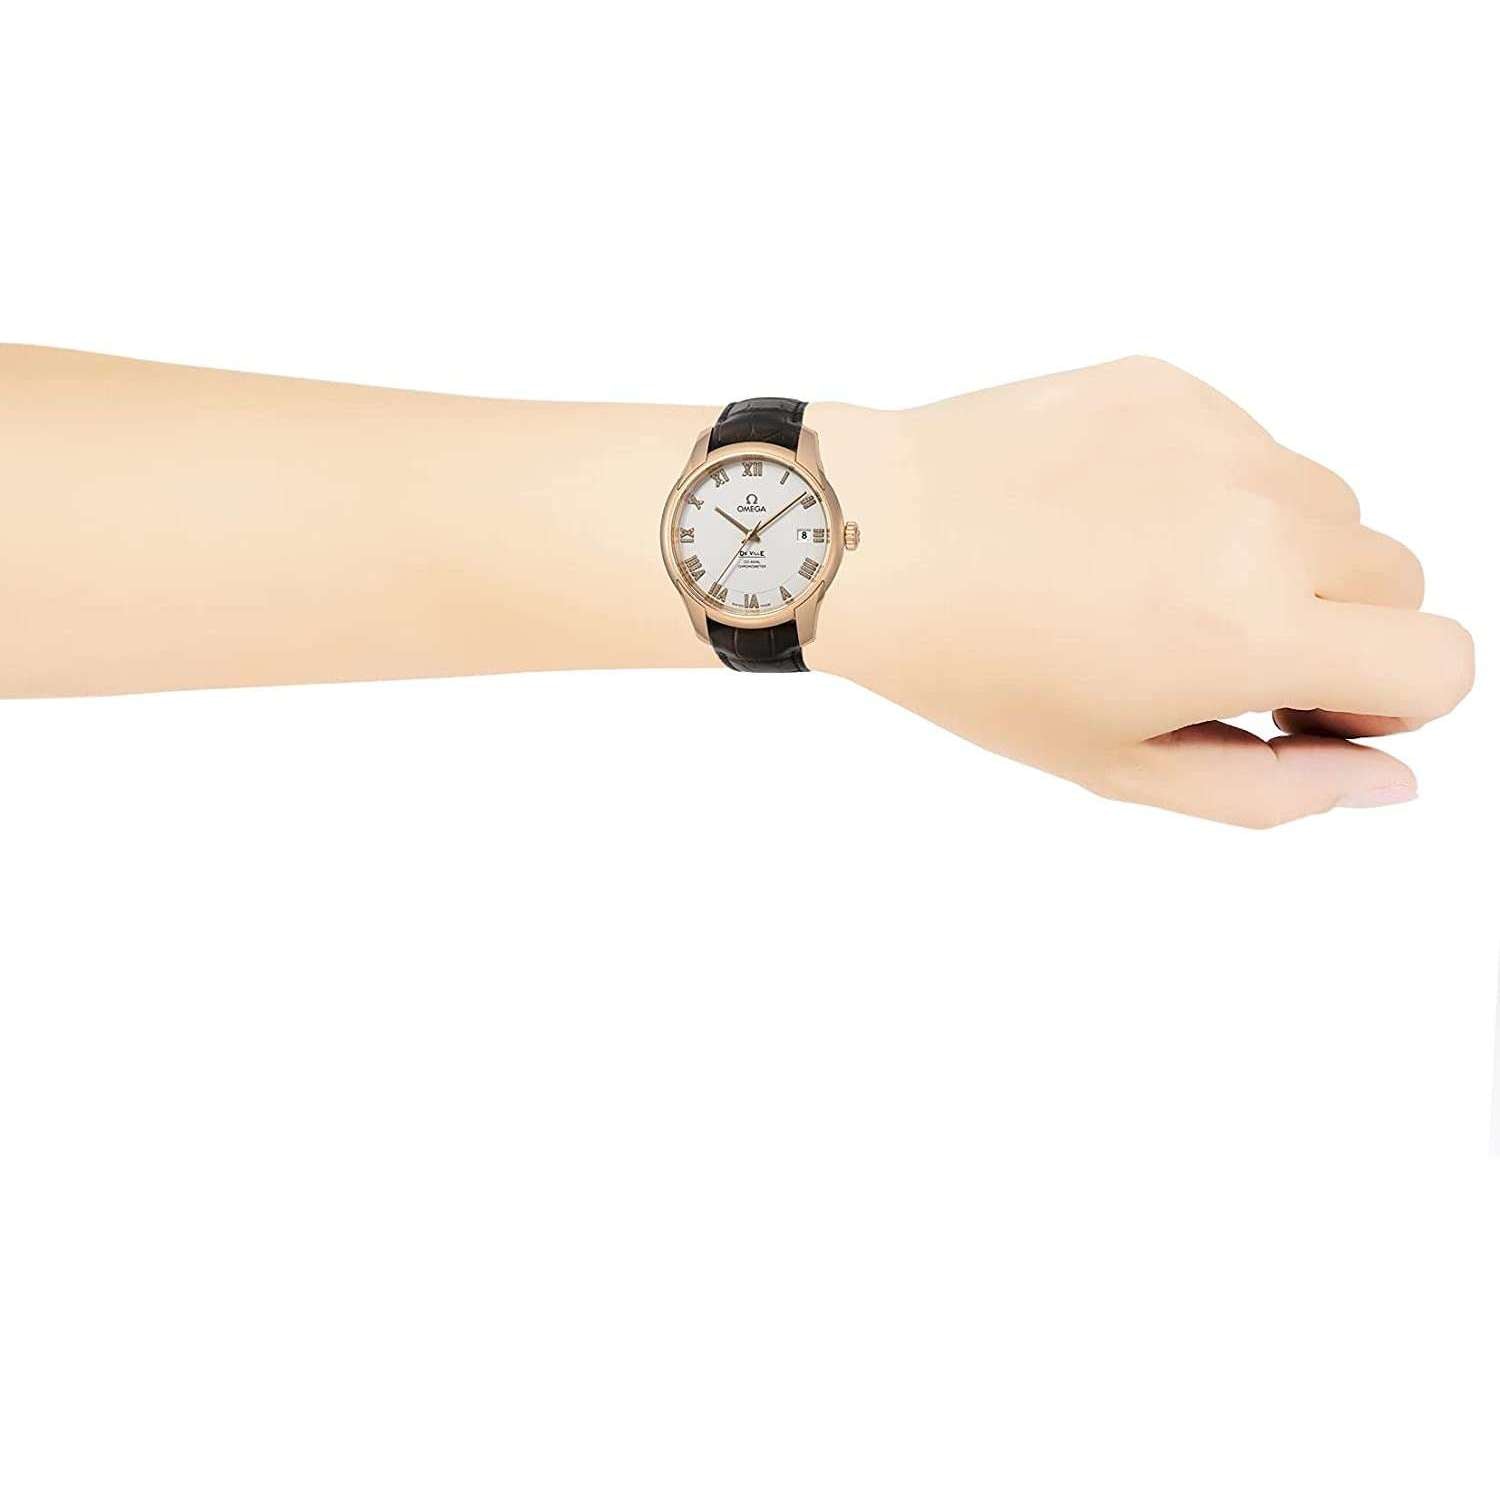 ROOK JAPAN:OMEGA DE VILLE CO-AXIAL CHRONOMETER 41 MM MEN WATCH 431.53.41.21.52.001,Luxury Watch,Omega